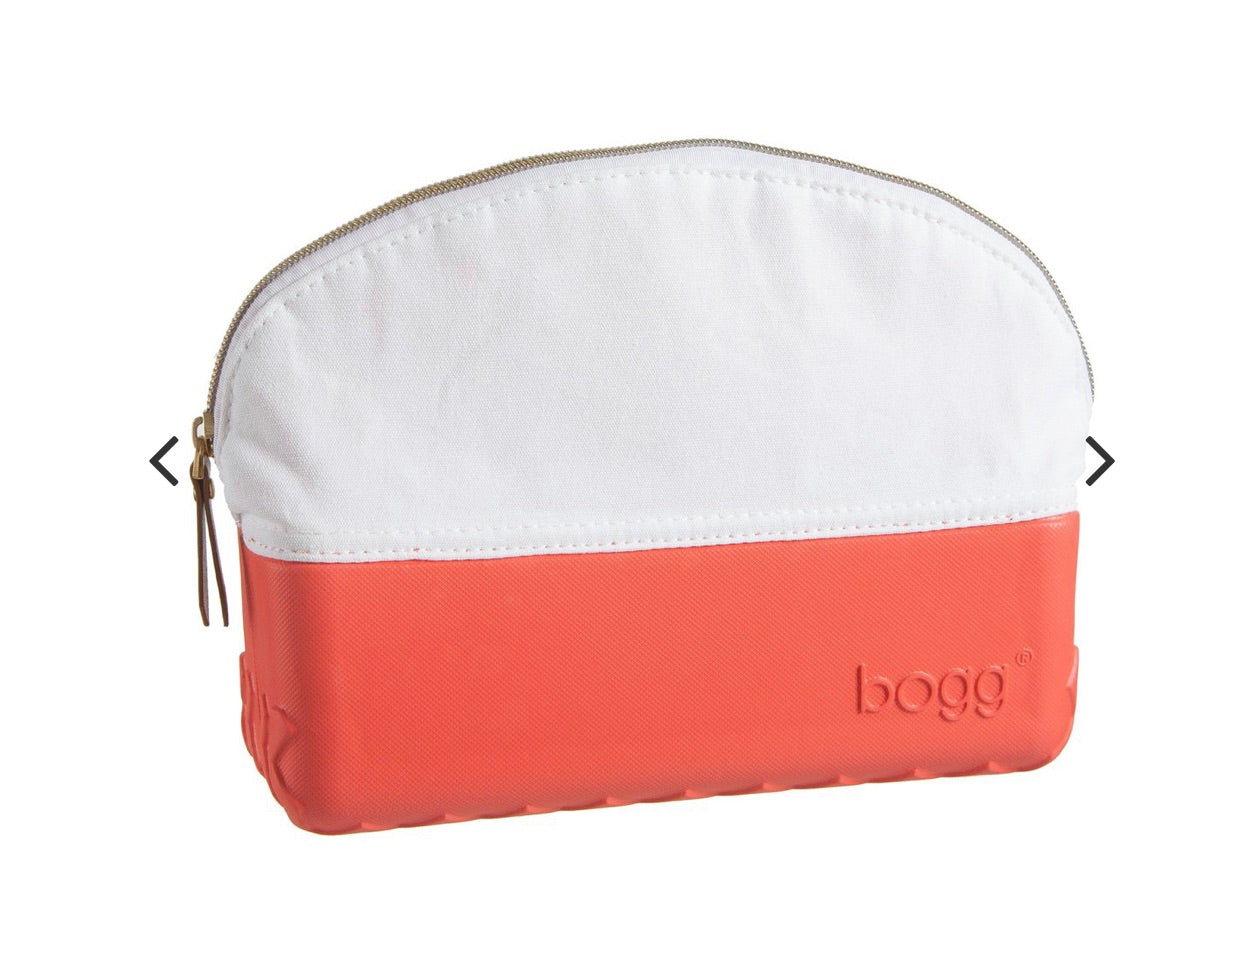 Beauty Bogg Bag- Seafoam – Modern Me Boutique